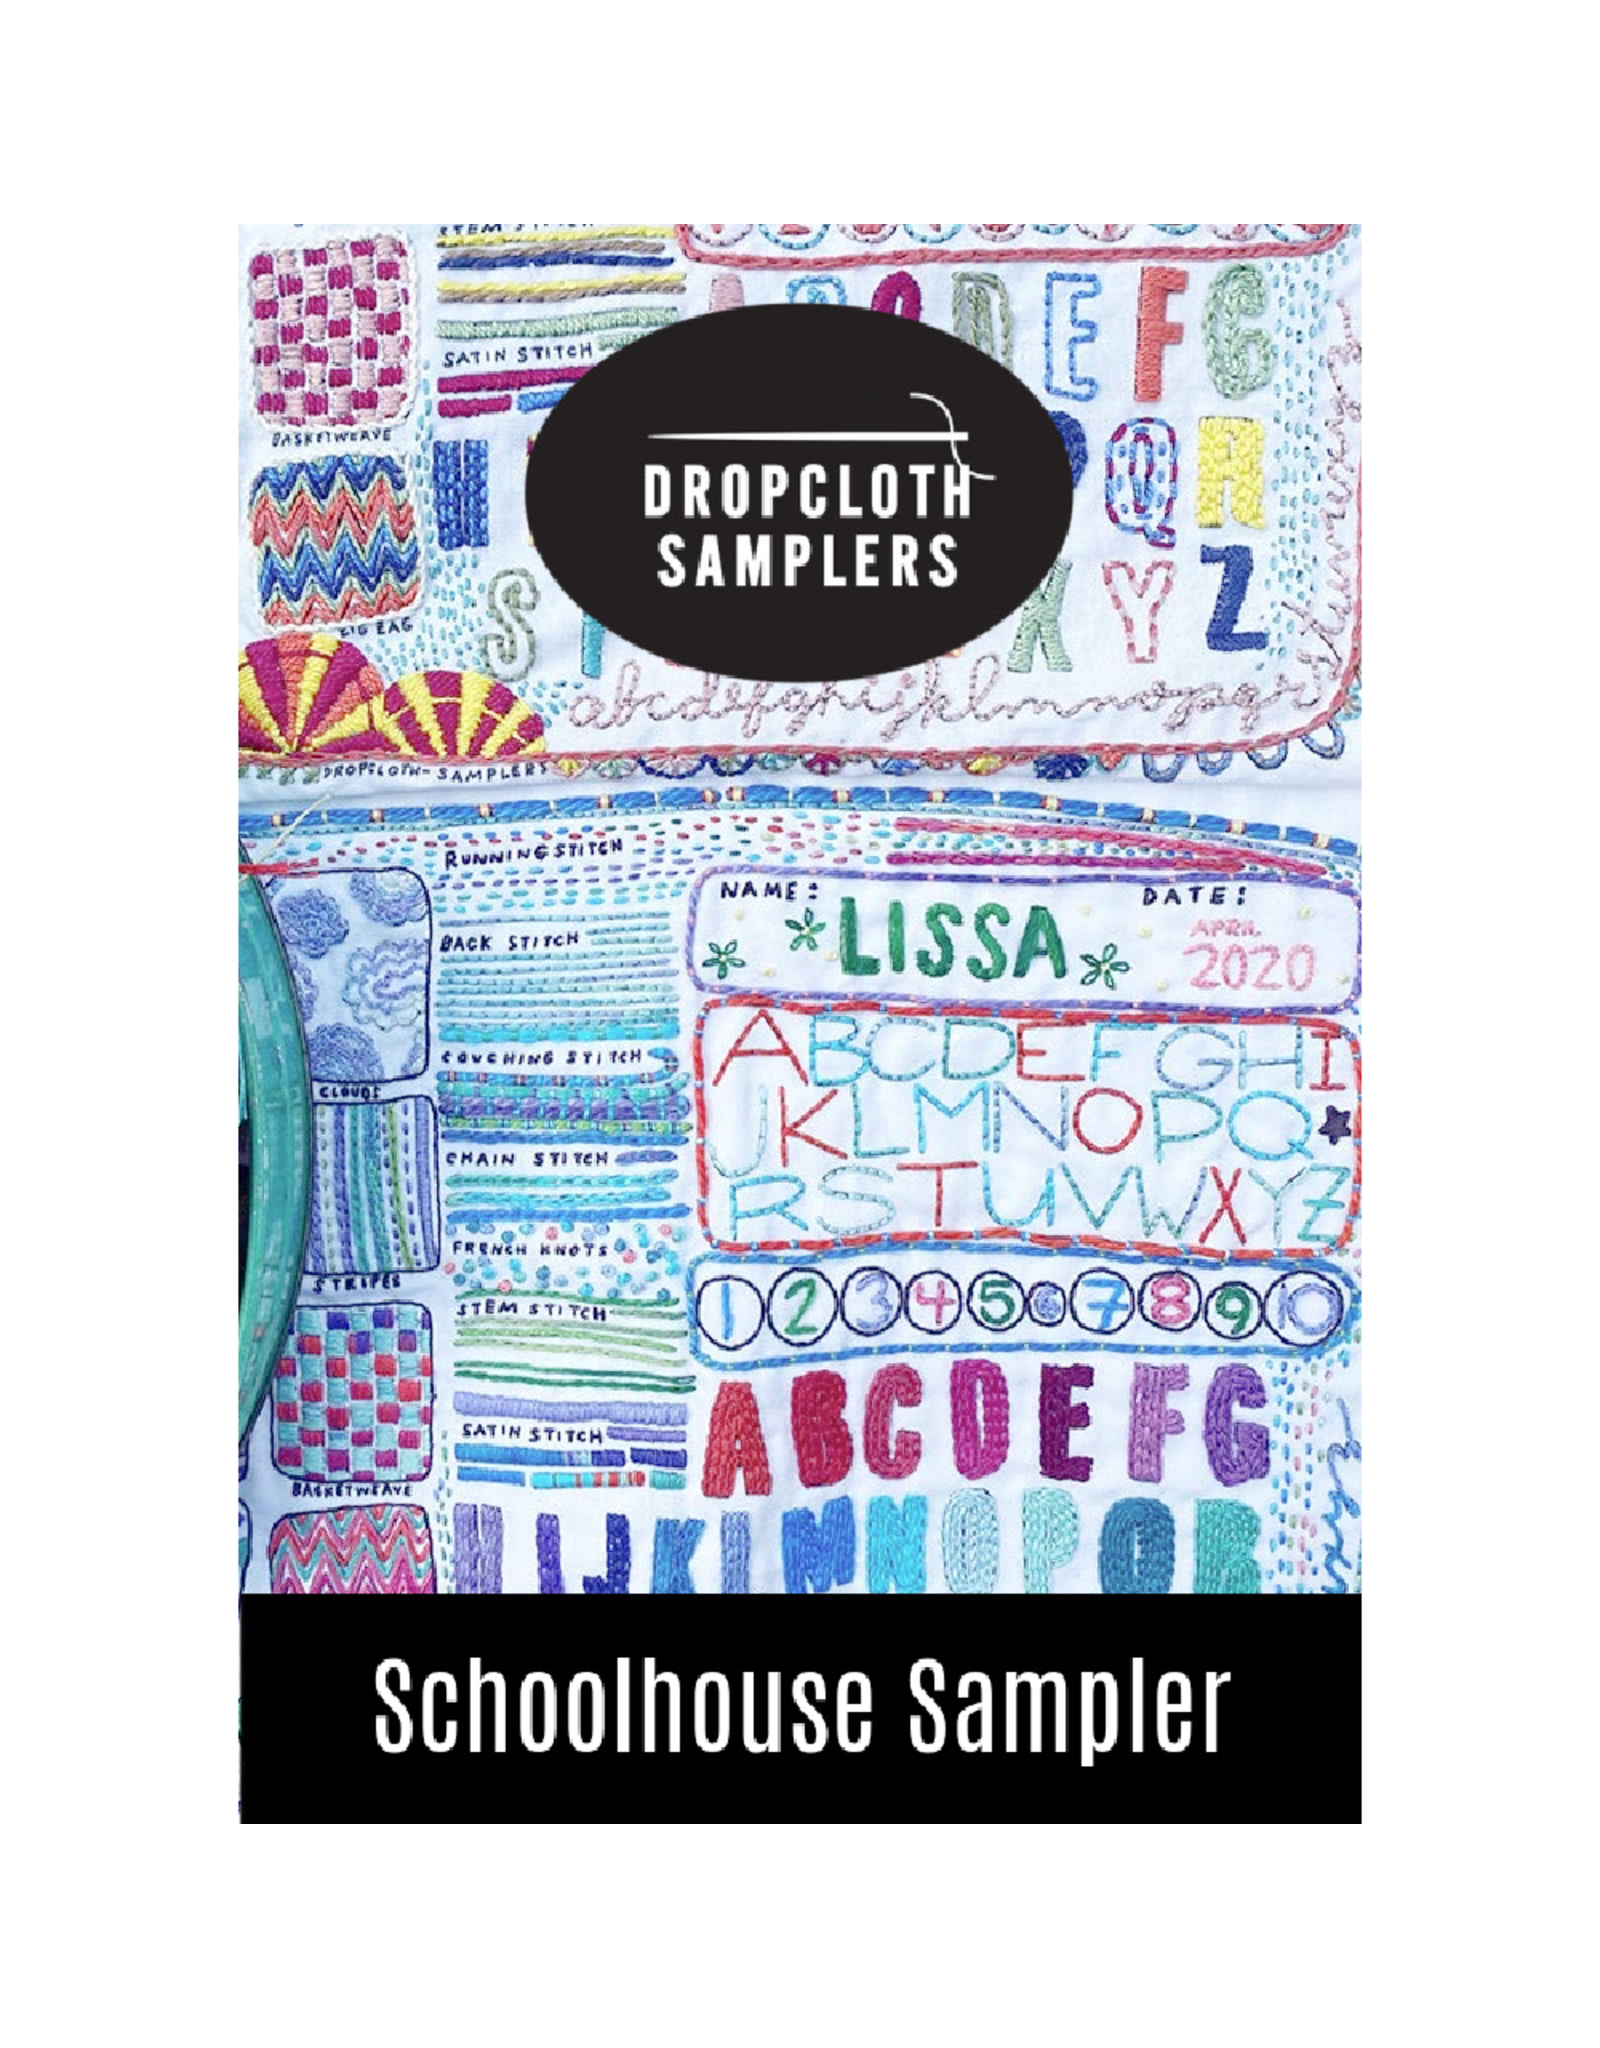 Dropcloth Samplers Schoolhouse Sampler, Embroidery Sampler